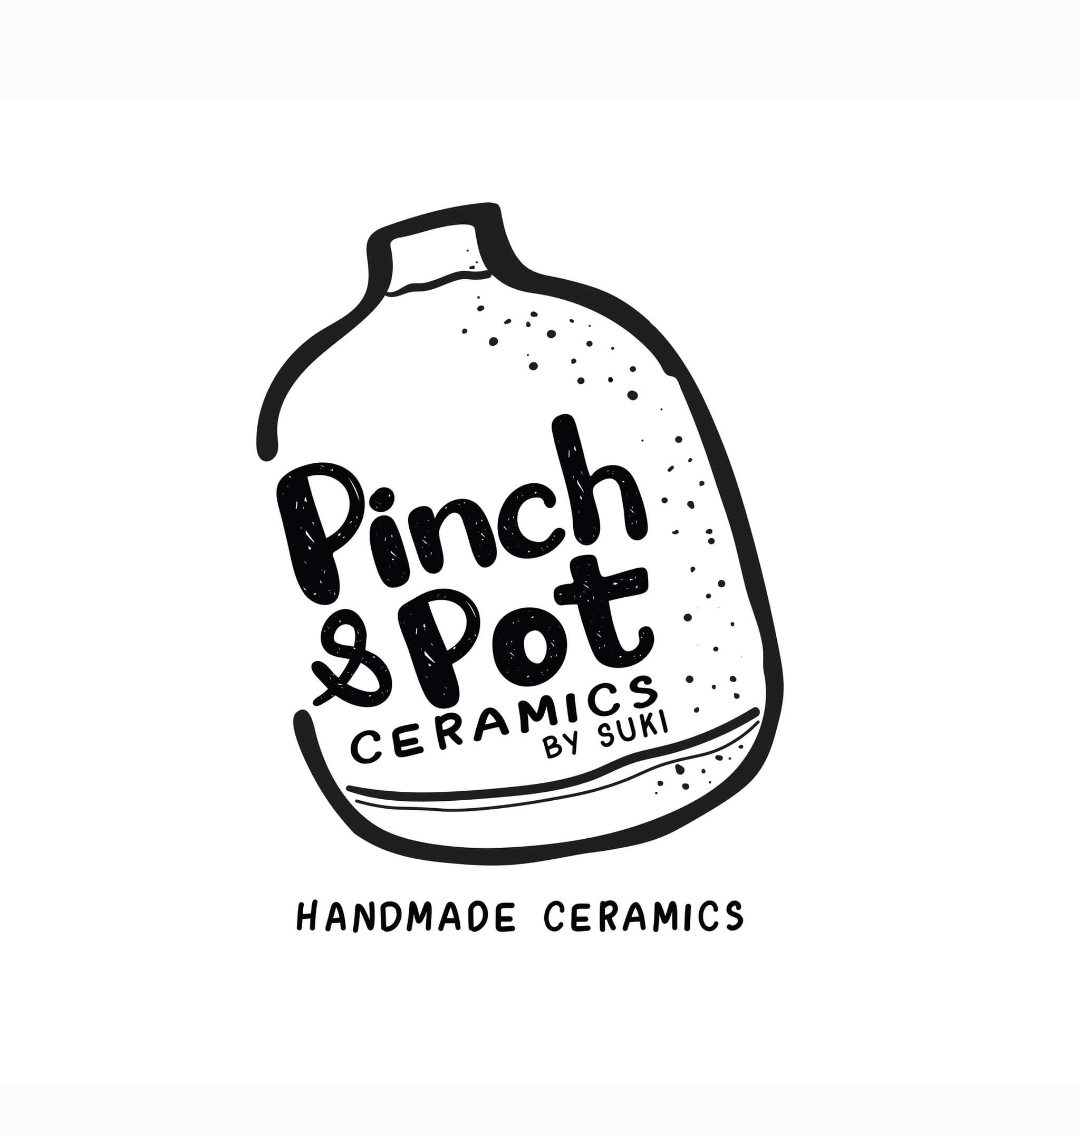 Pinch and Pot Ceramics business logo - handmade ceramics with text